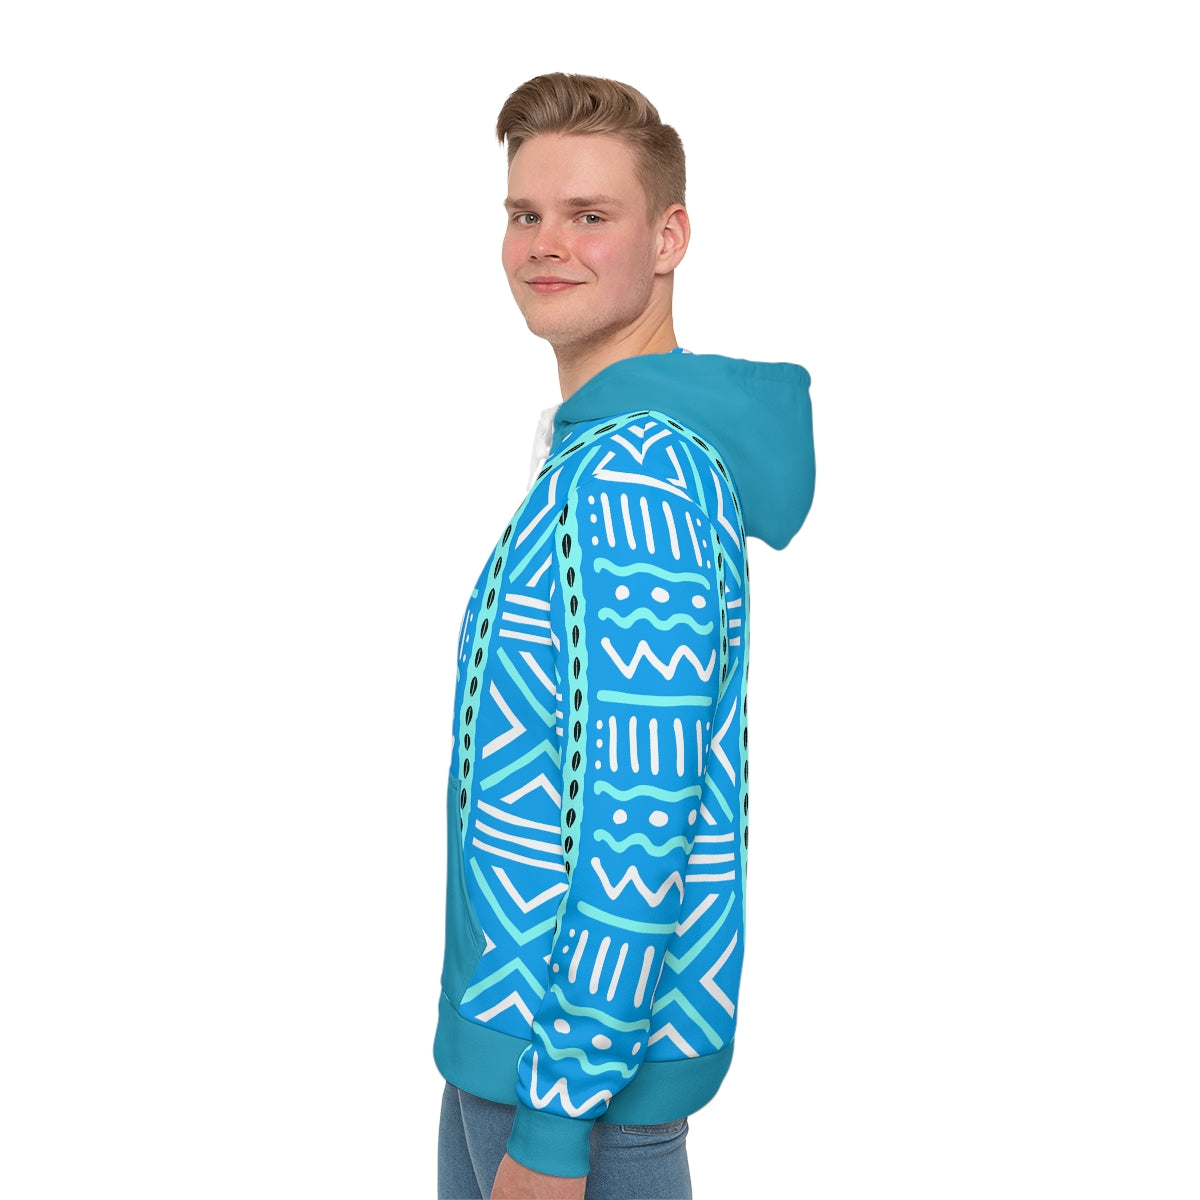 Blue Mens Sweatshirt Hoodie Mudcloth Print Design